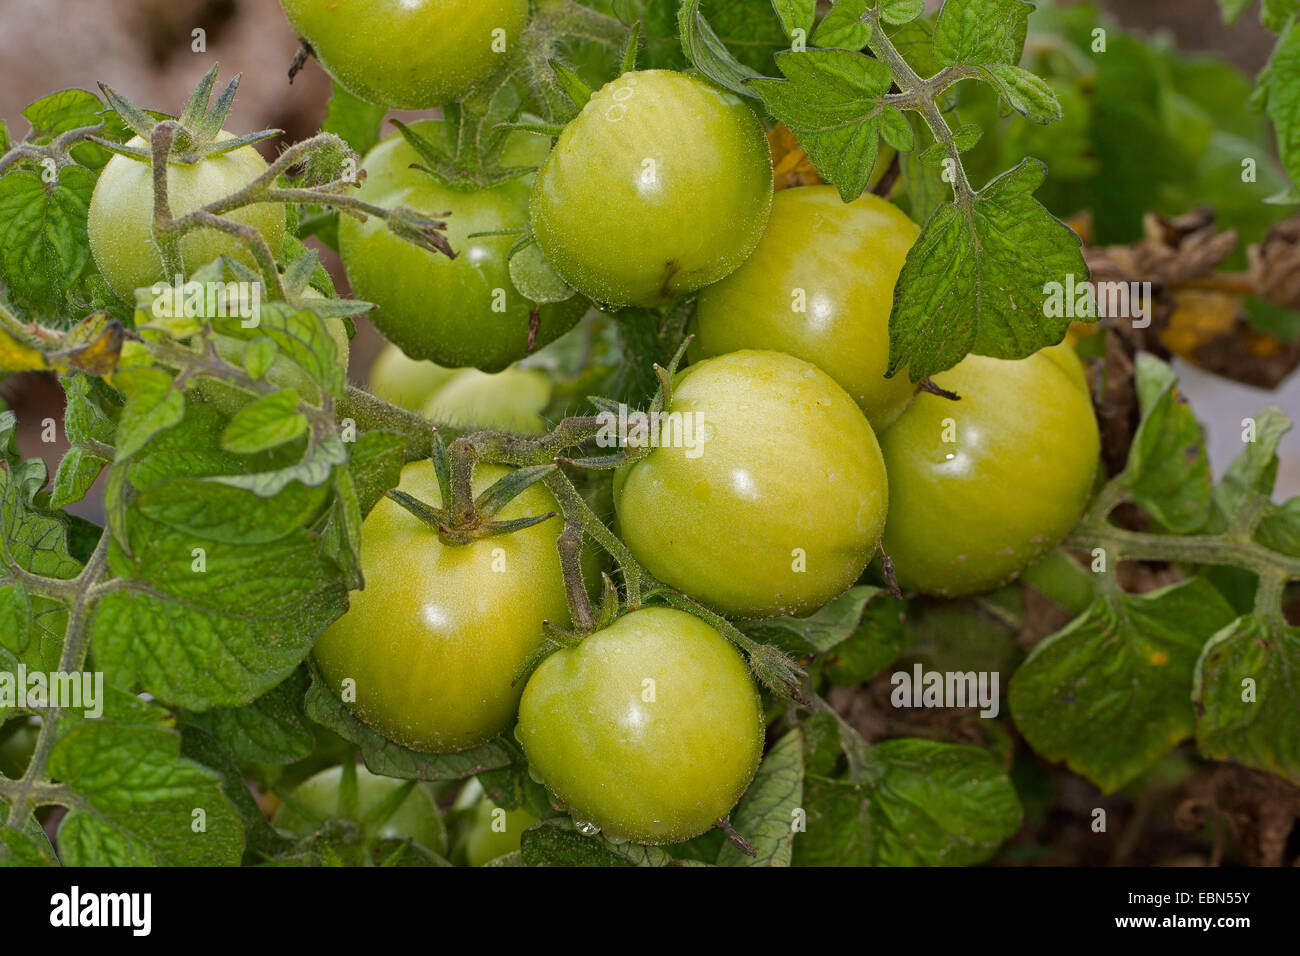 garden tomato (Solanum lycopersicum, Lycopersicon esculentum), unripe tomatoes on a plant Stock Photo